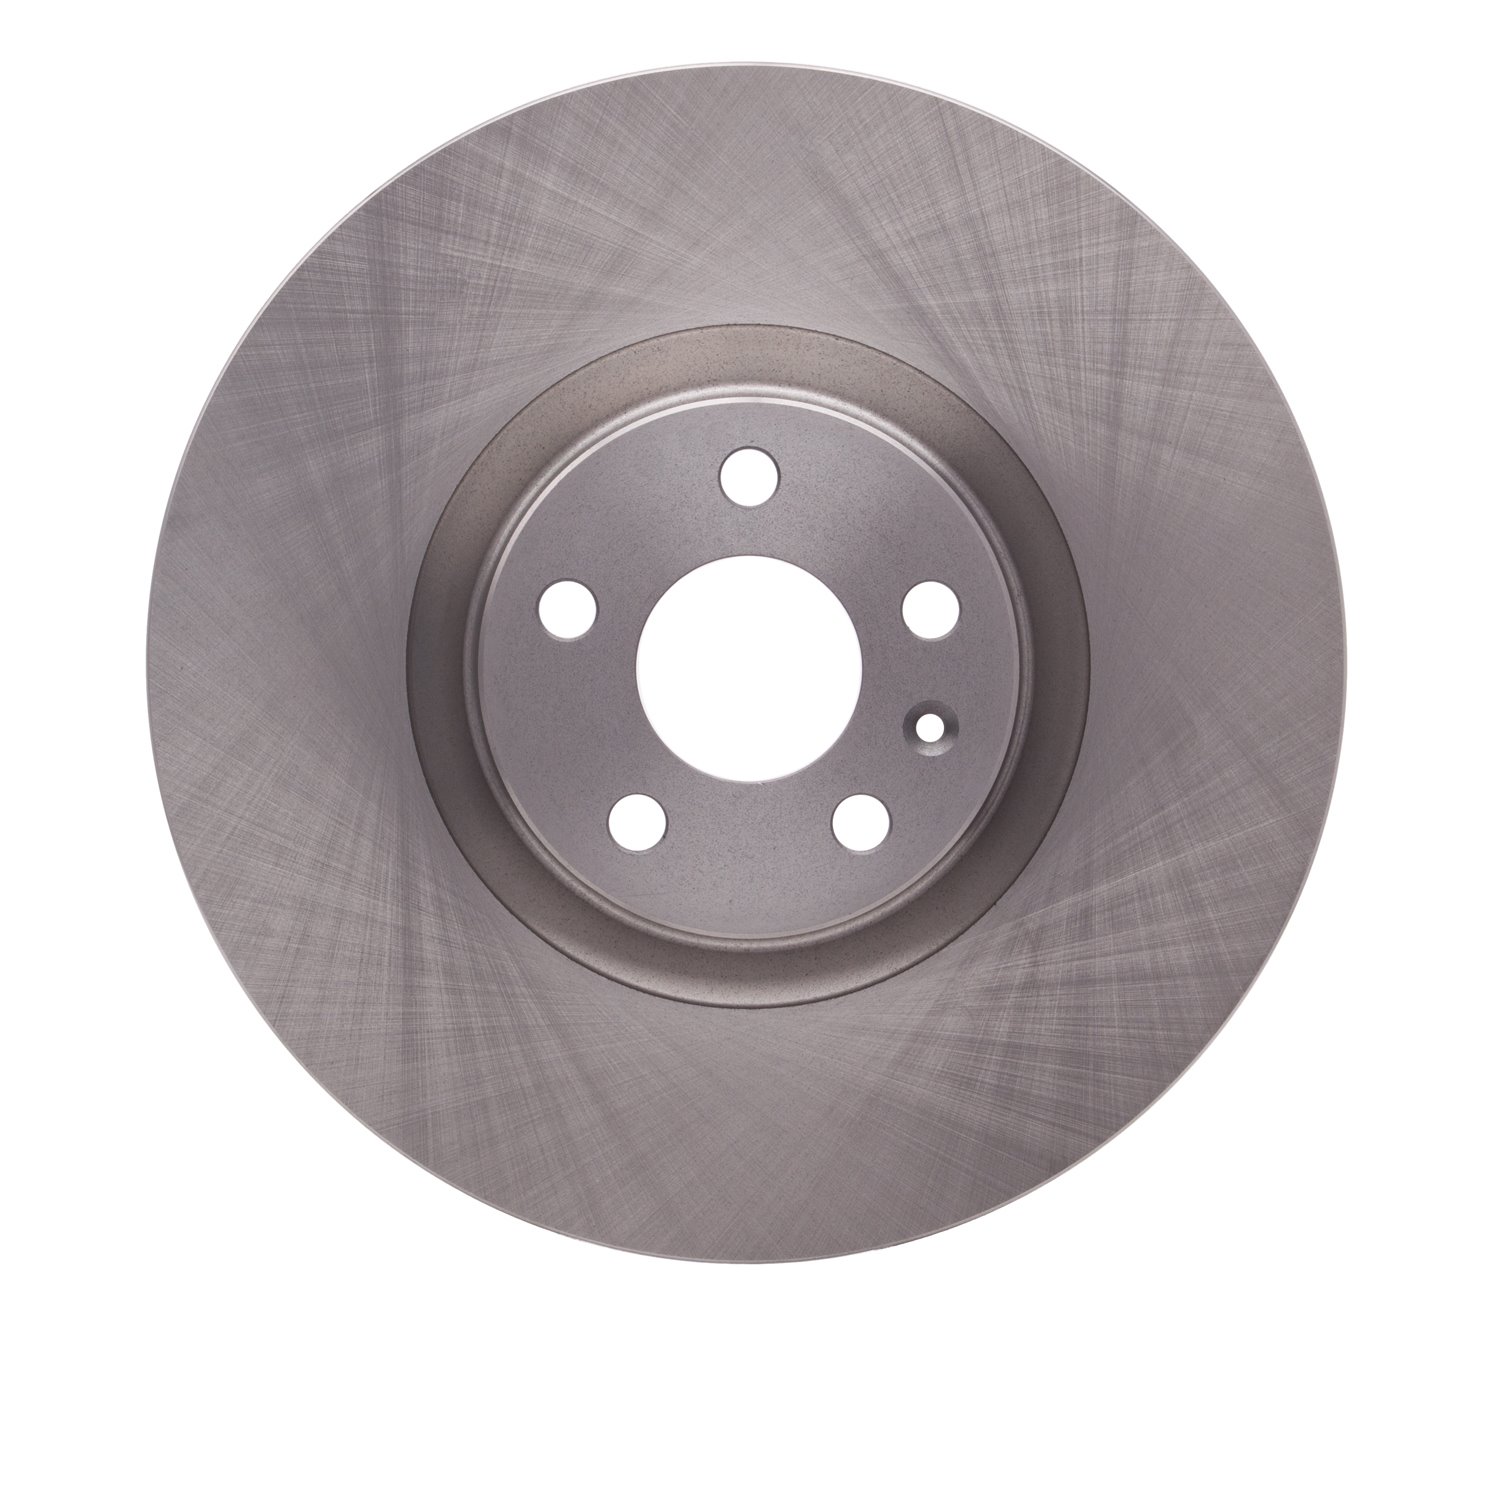 600-27051 Brake Rotor, Fits Select Multiple Makes/Models, Position: Front